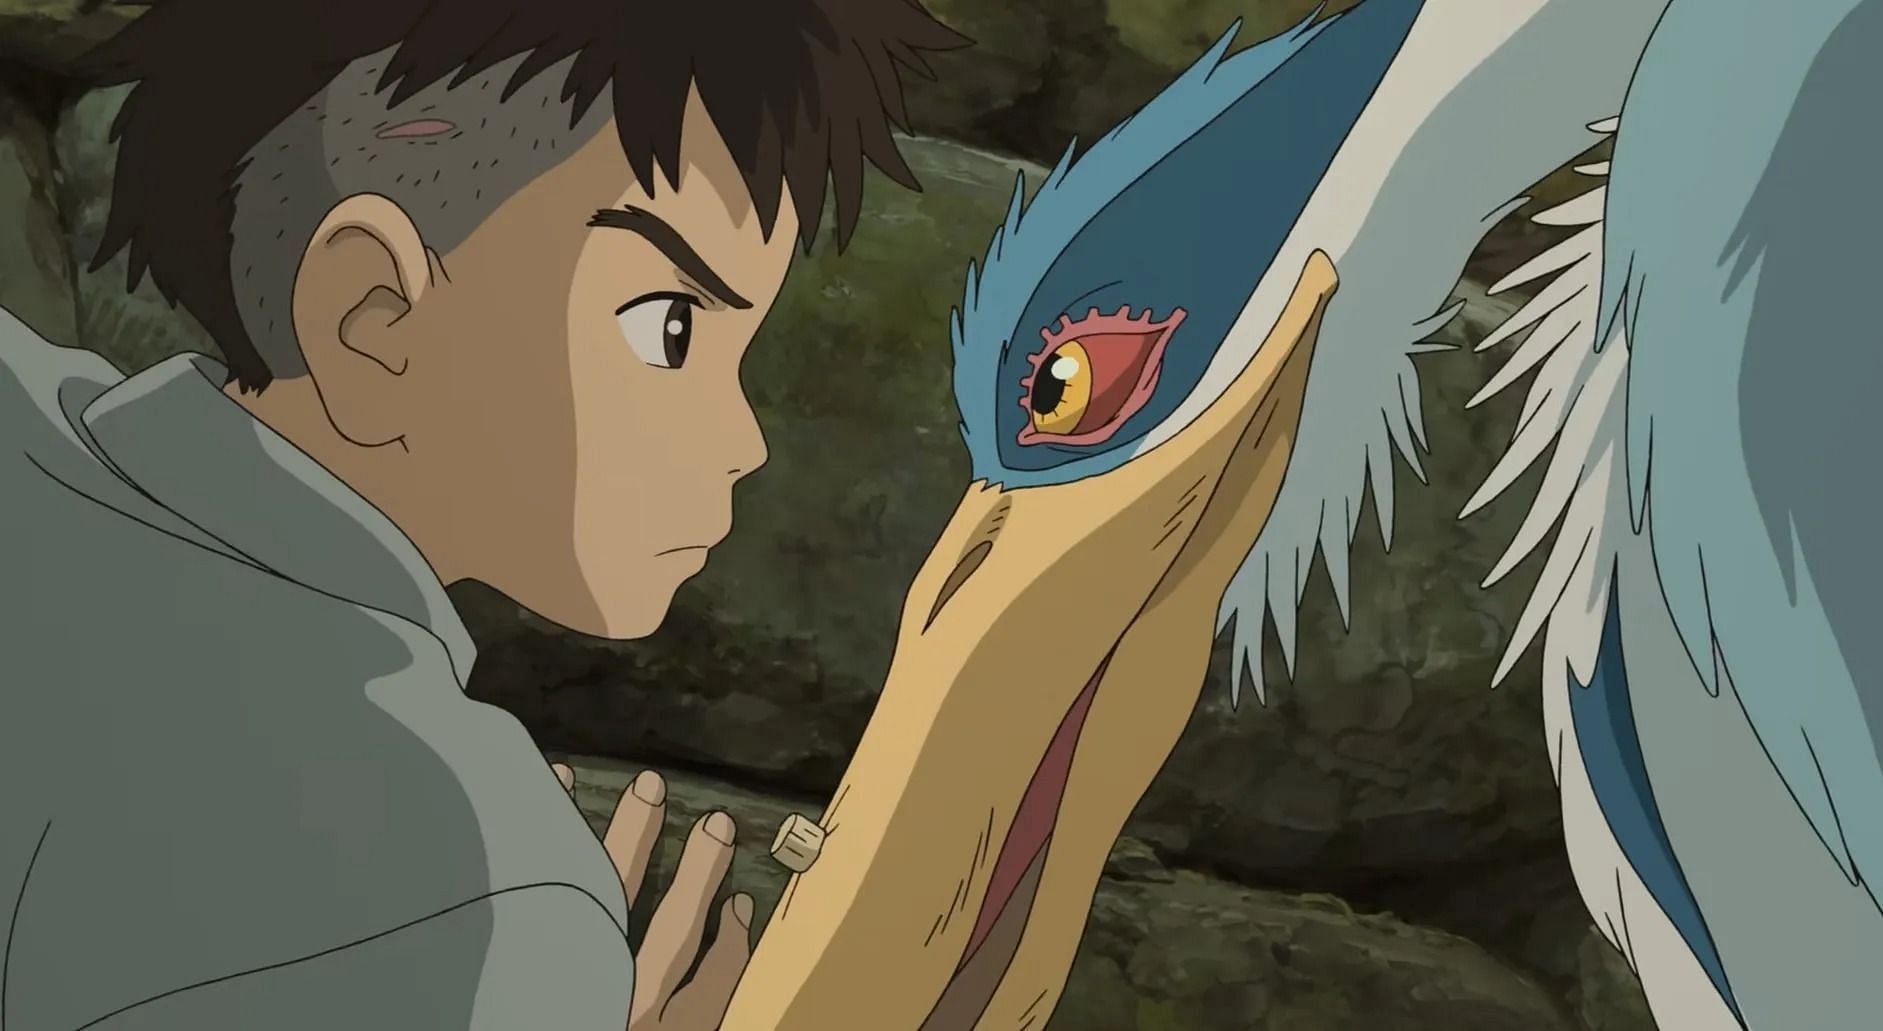 Mahito and the Heron as seen in the anime movie (Image via Studio Ghibli)